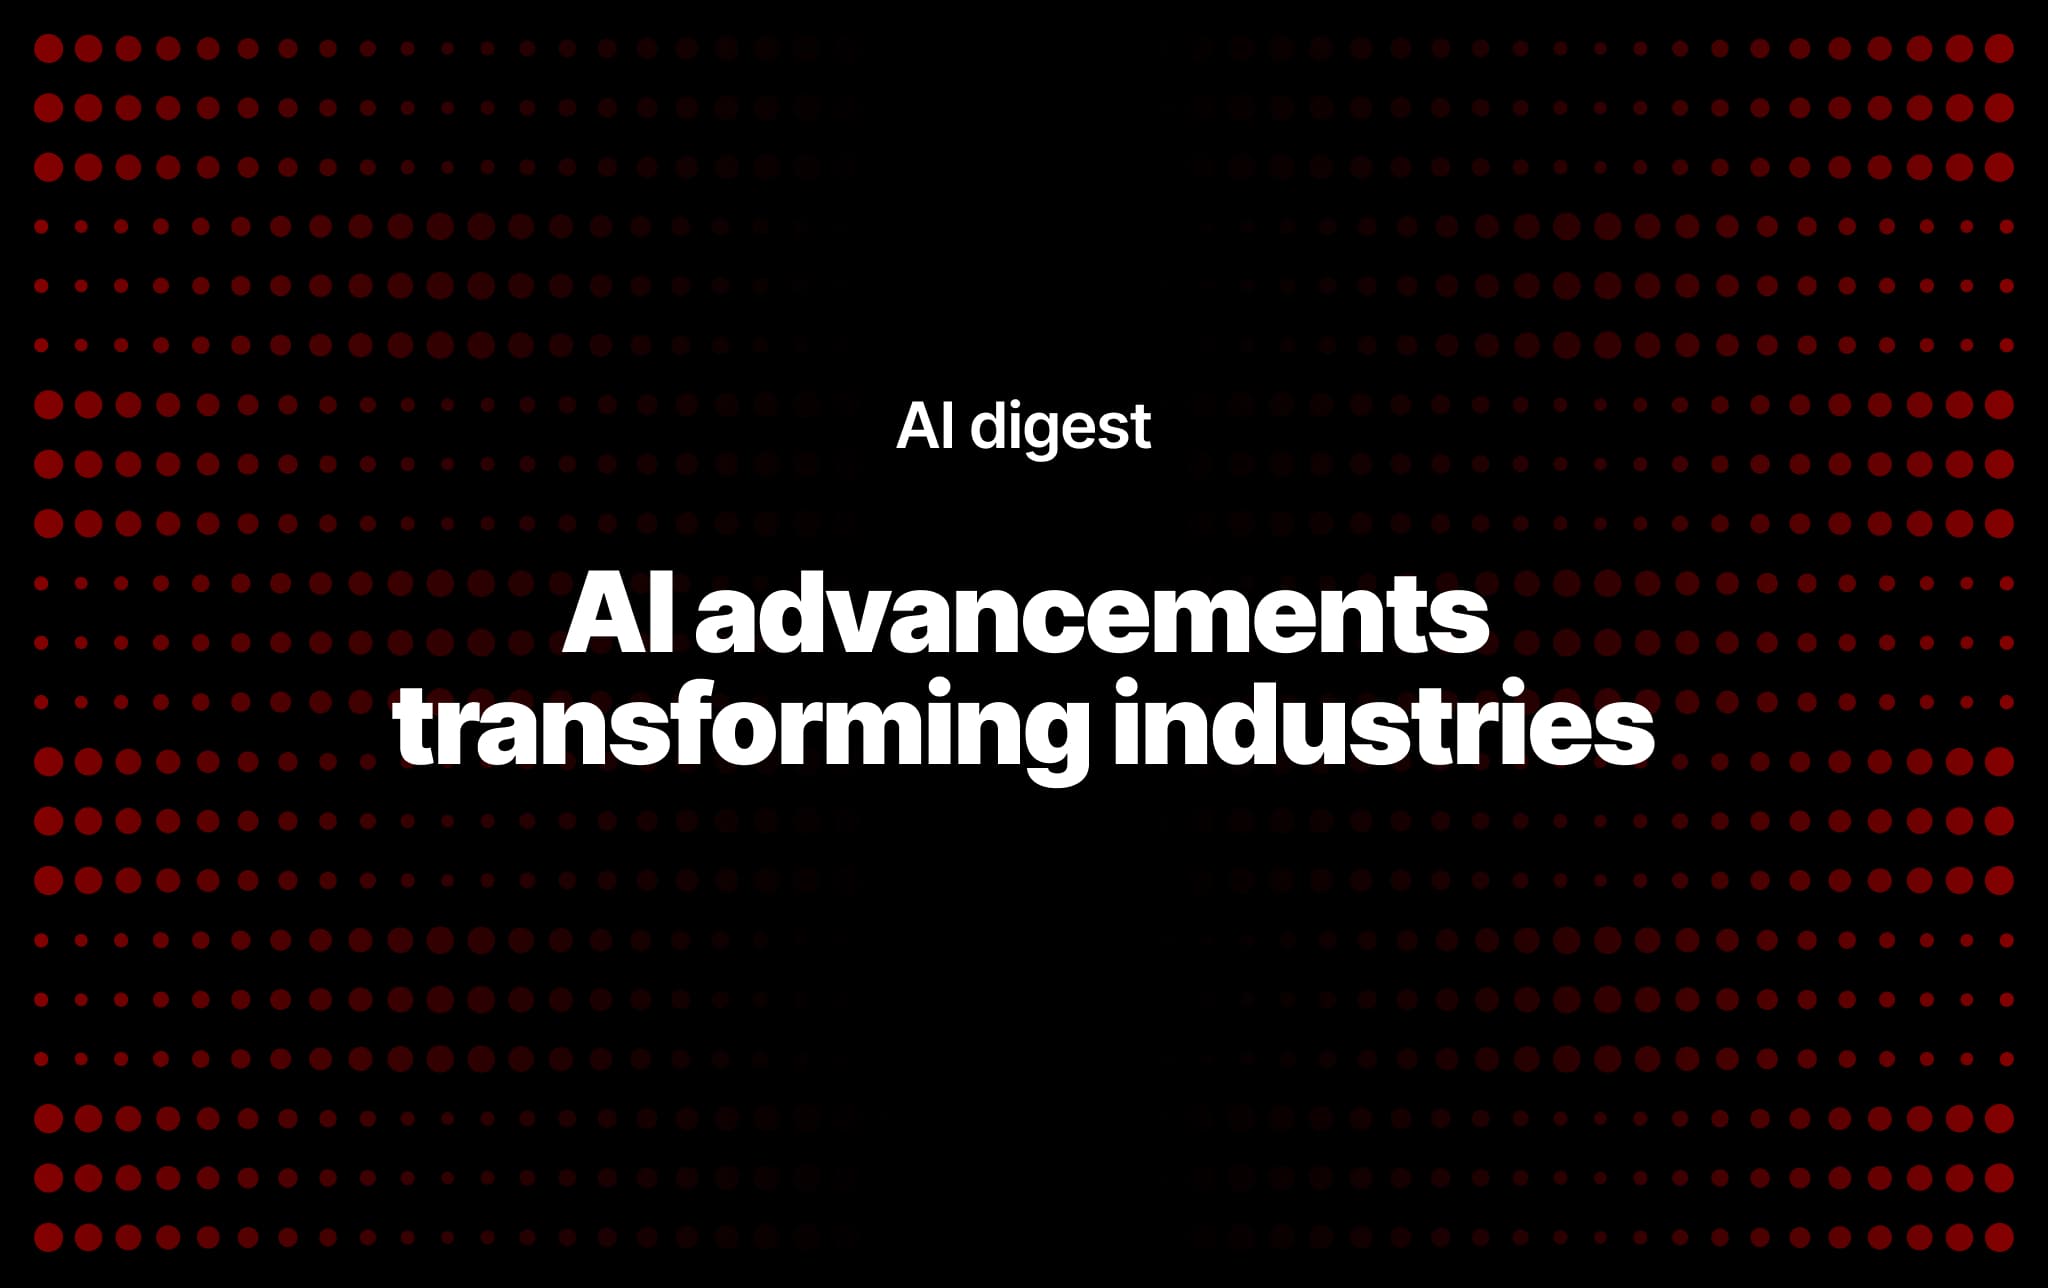 AI advancements transforming industries